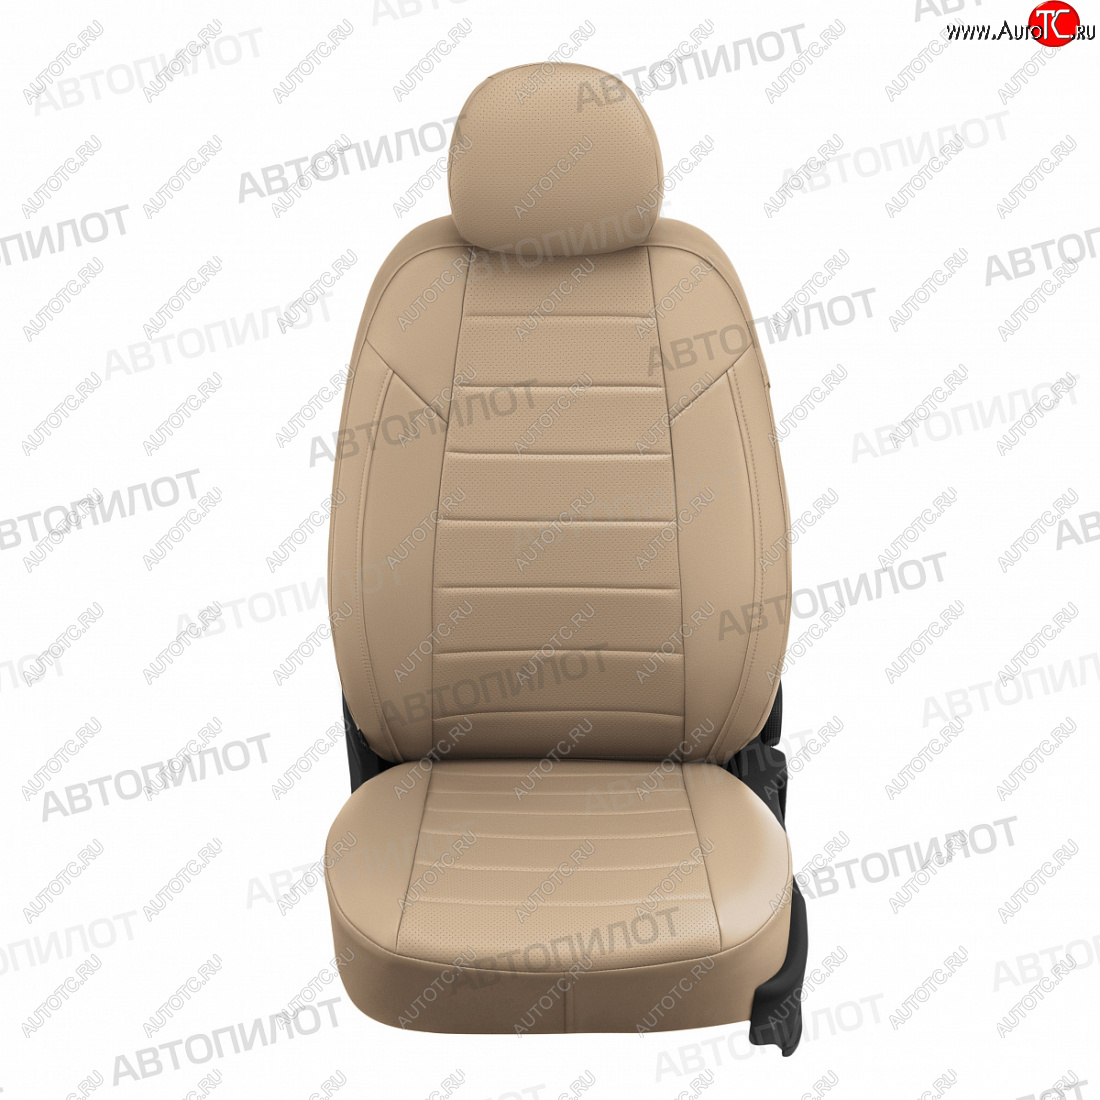 13 449 р. Чехлы сидений (экокожа) Автопилот  Hyundai Terracan  1 HP (2001-2007) (темно-бежевый)